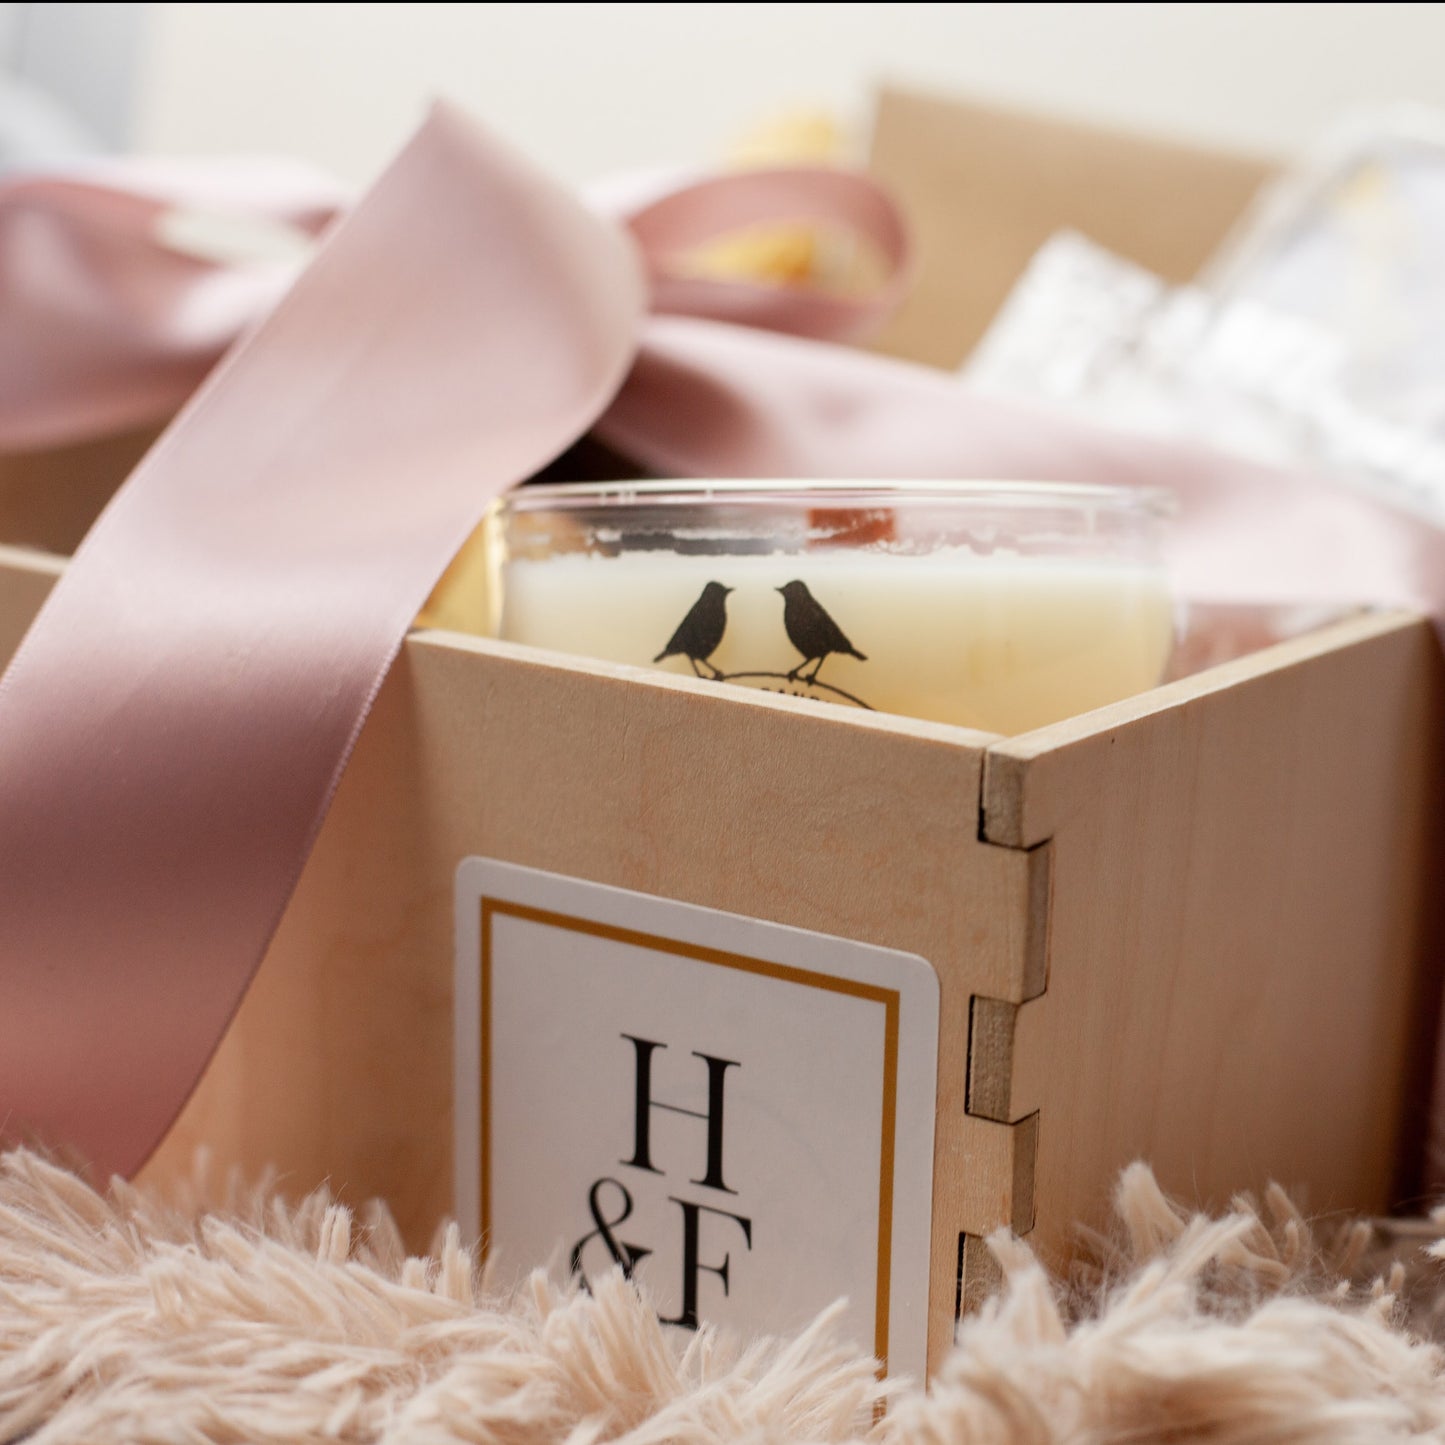 H&F Gift Box Subscription